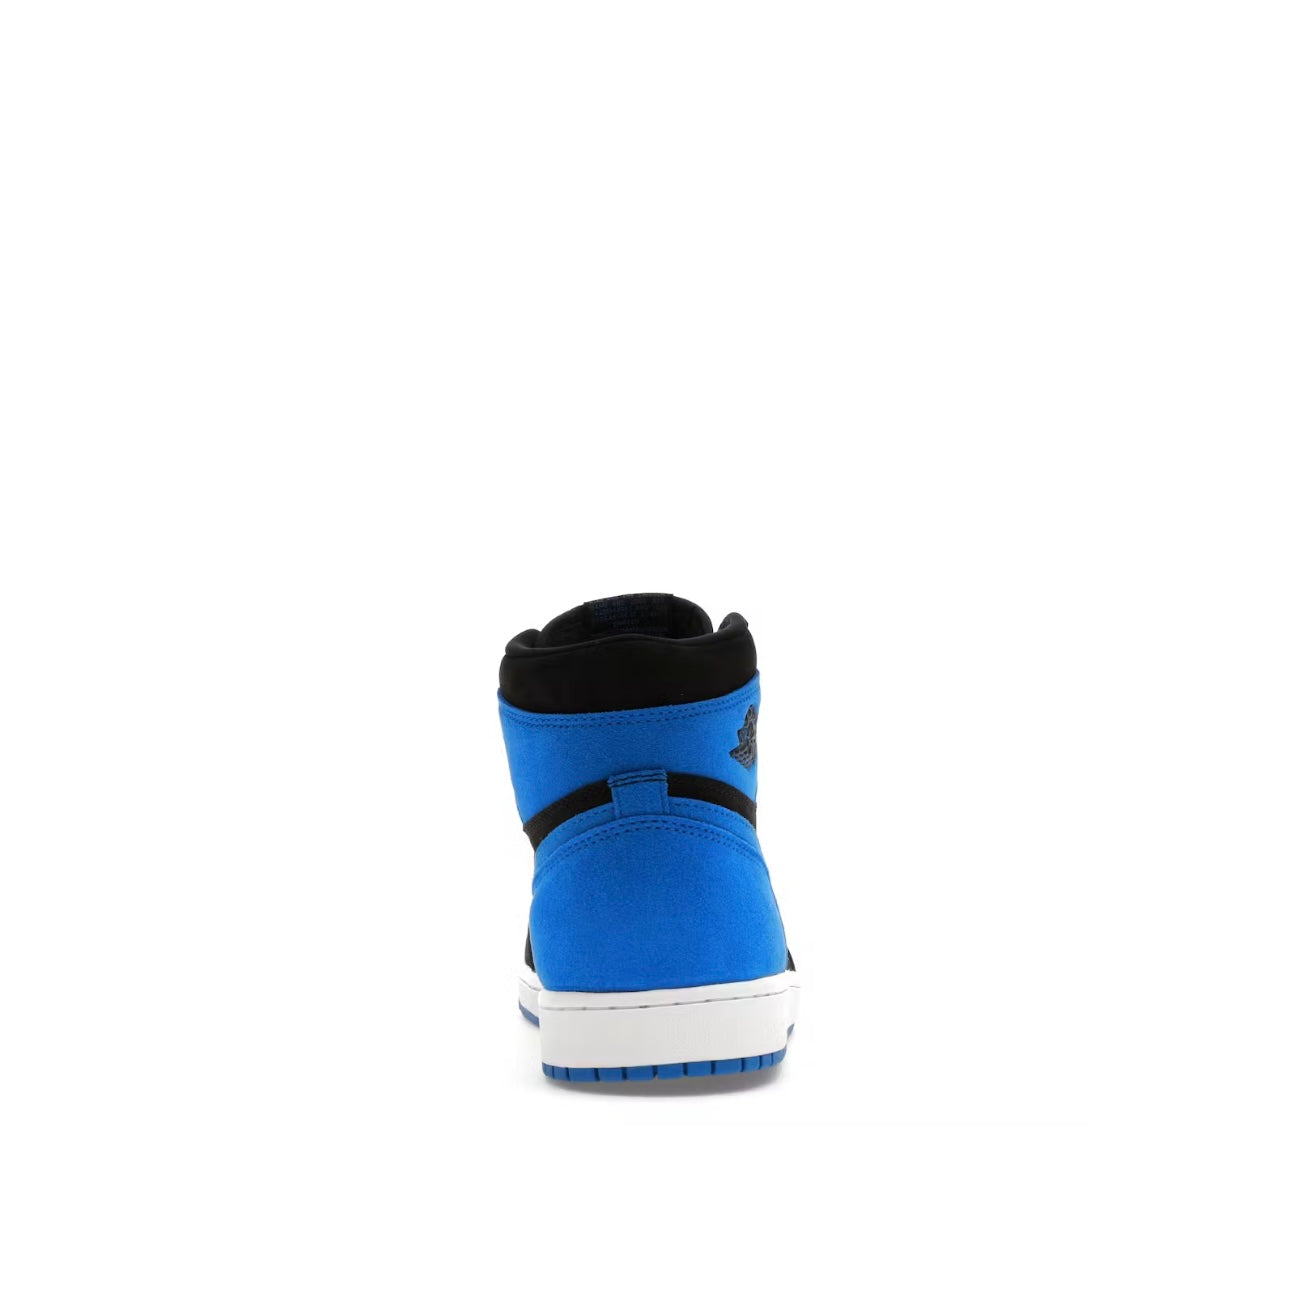 Air Jordan 1 retro high OG en azul real - PENGUIN SHOES Penguin shoes